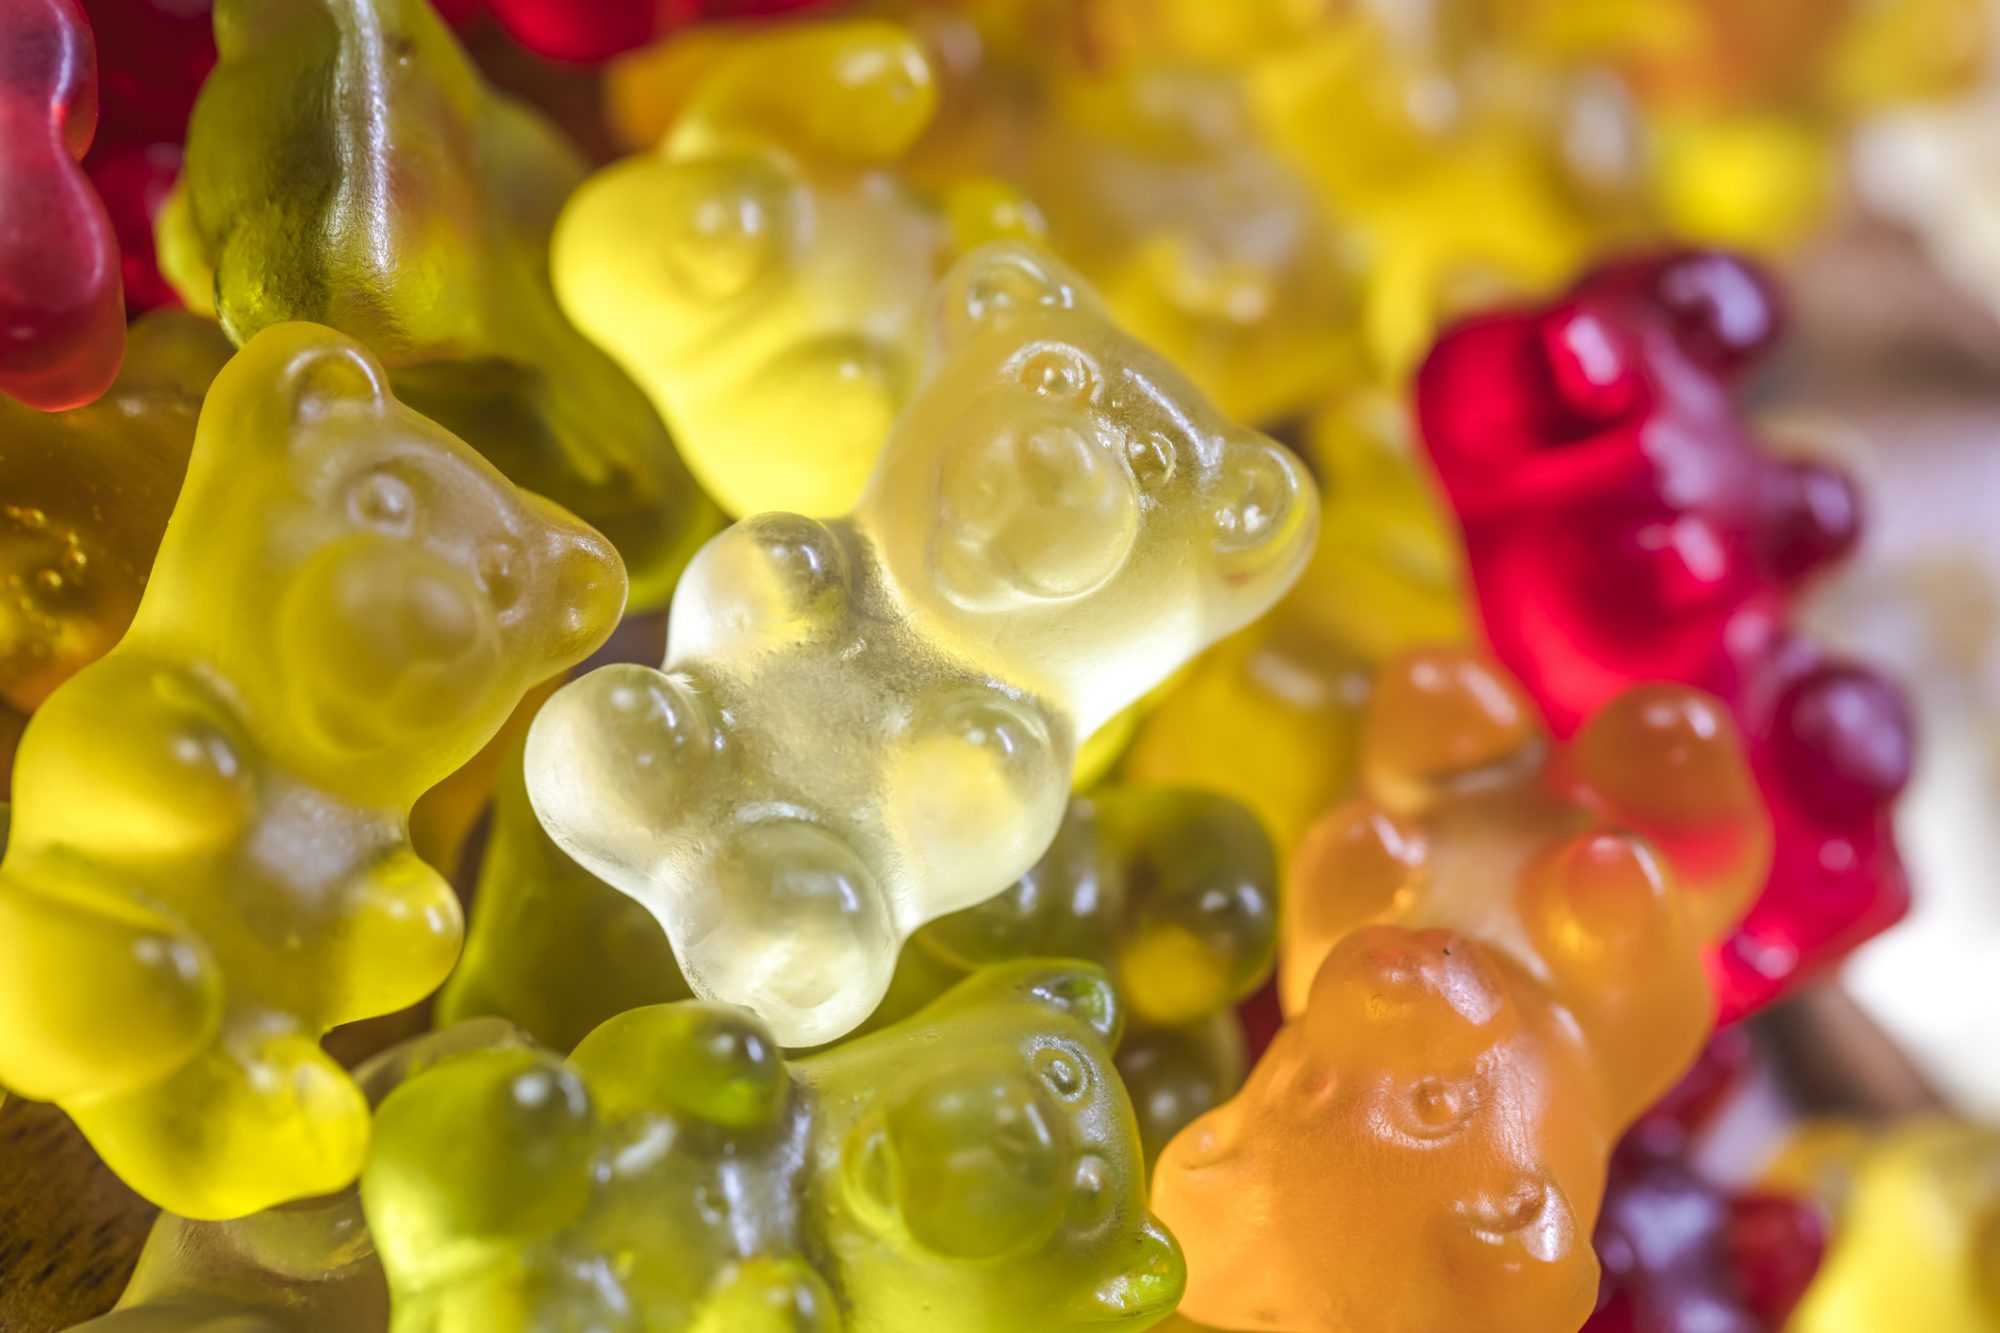 Gummy bear maker Haribo slammed for suppliers' labor practices